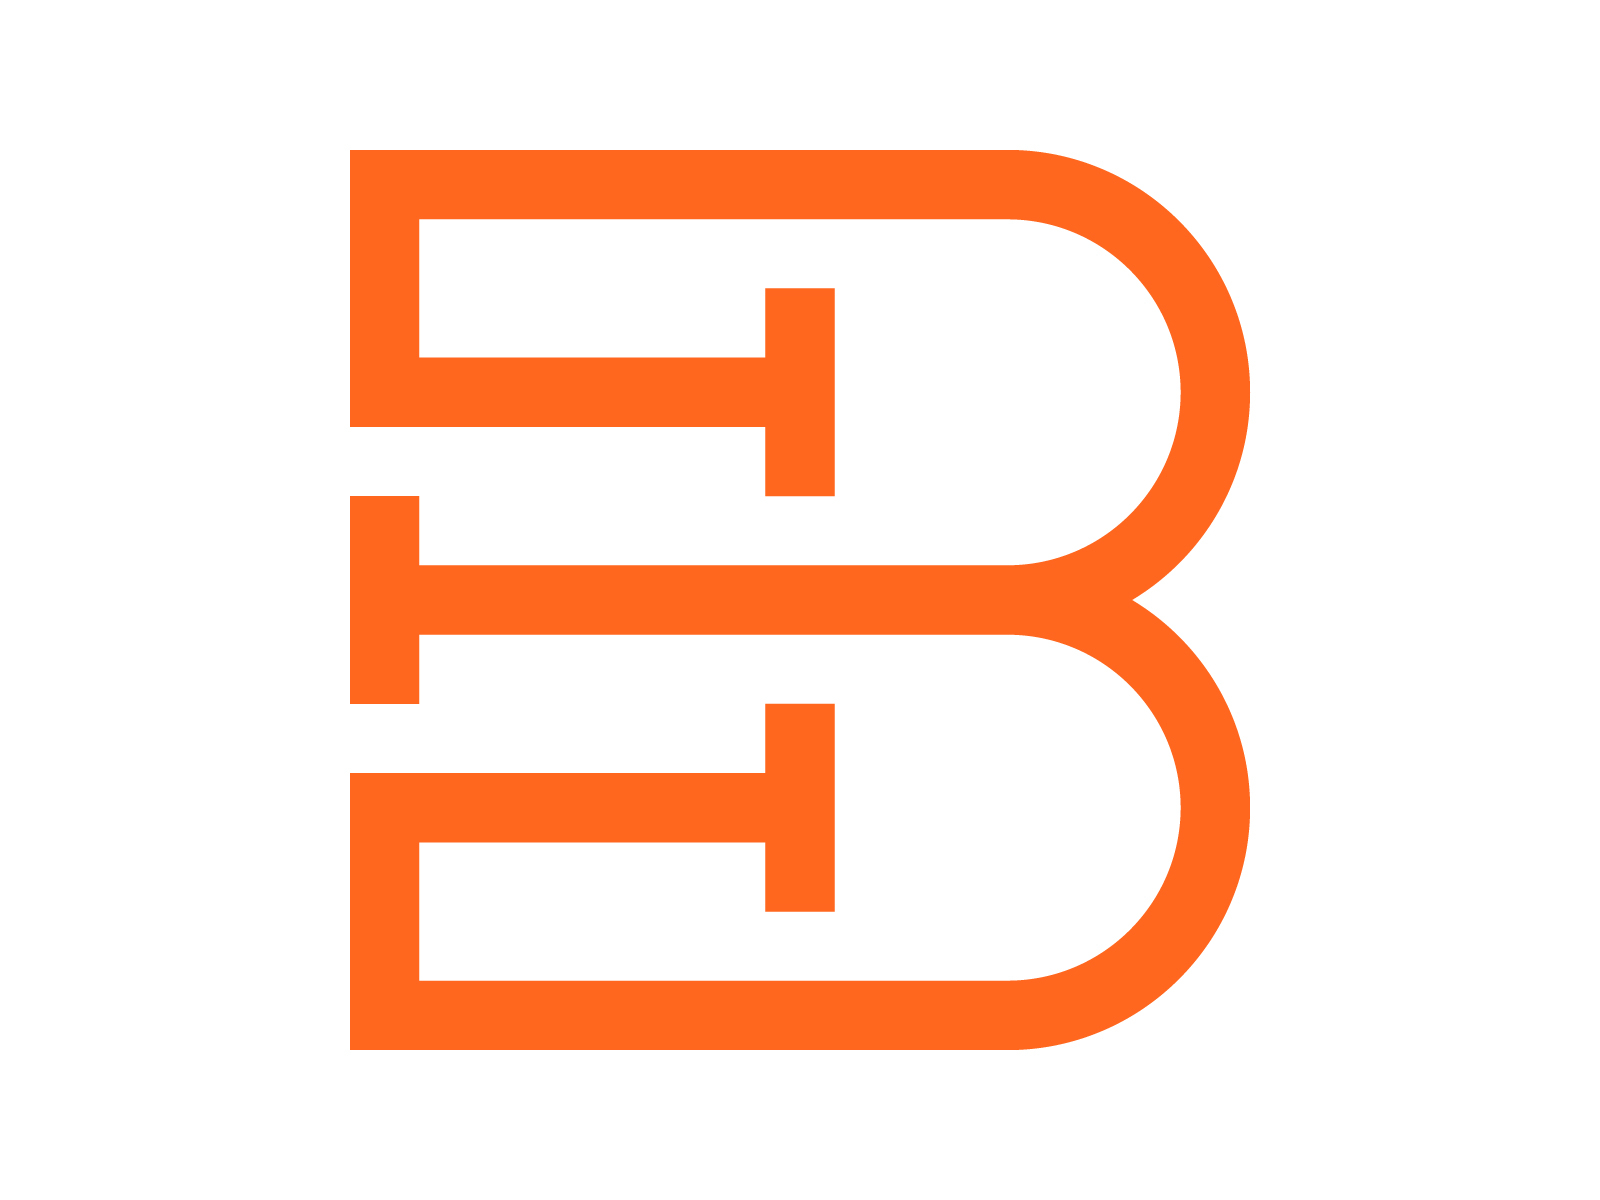 B Logo by Xler8brain on Dribbble